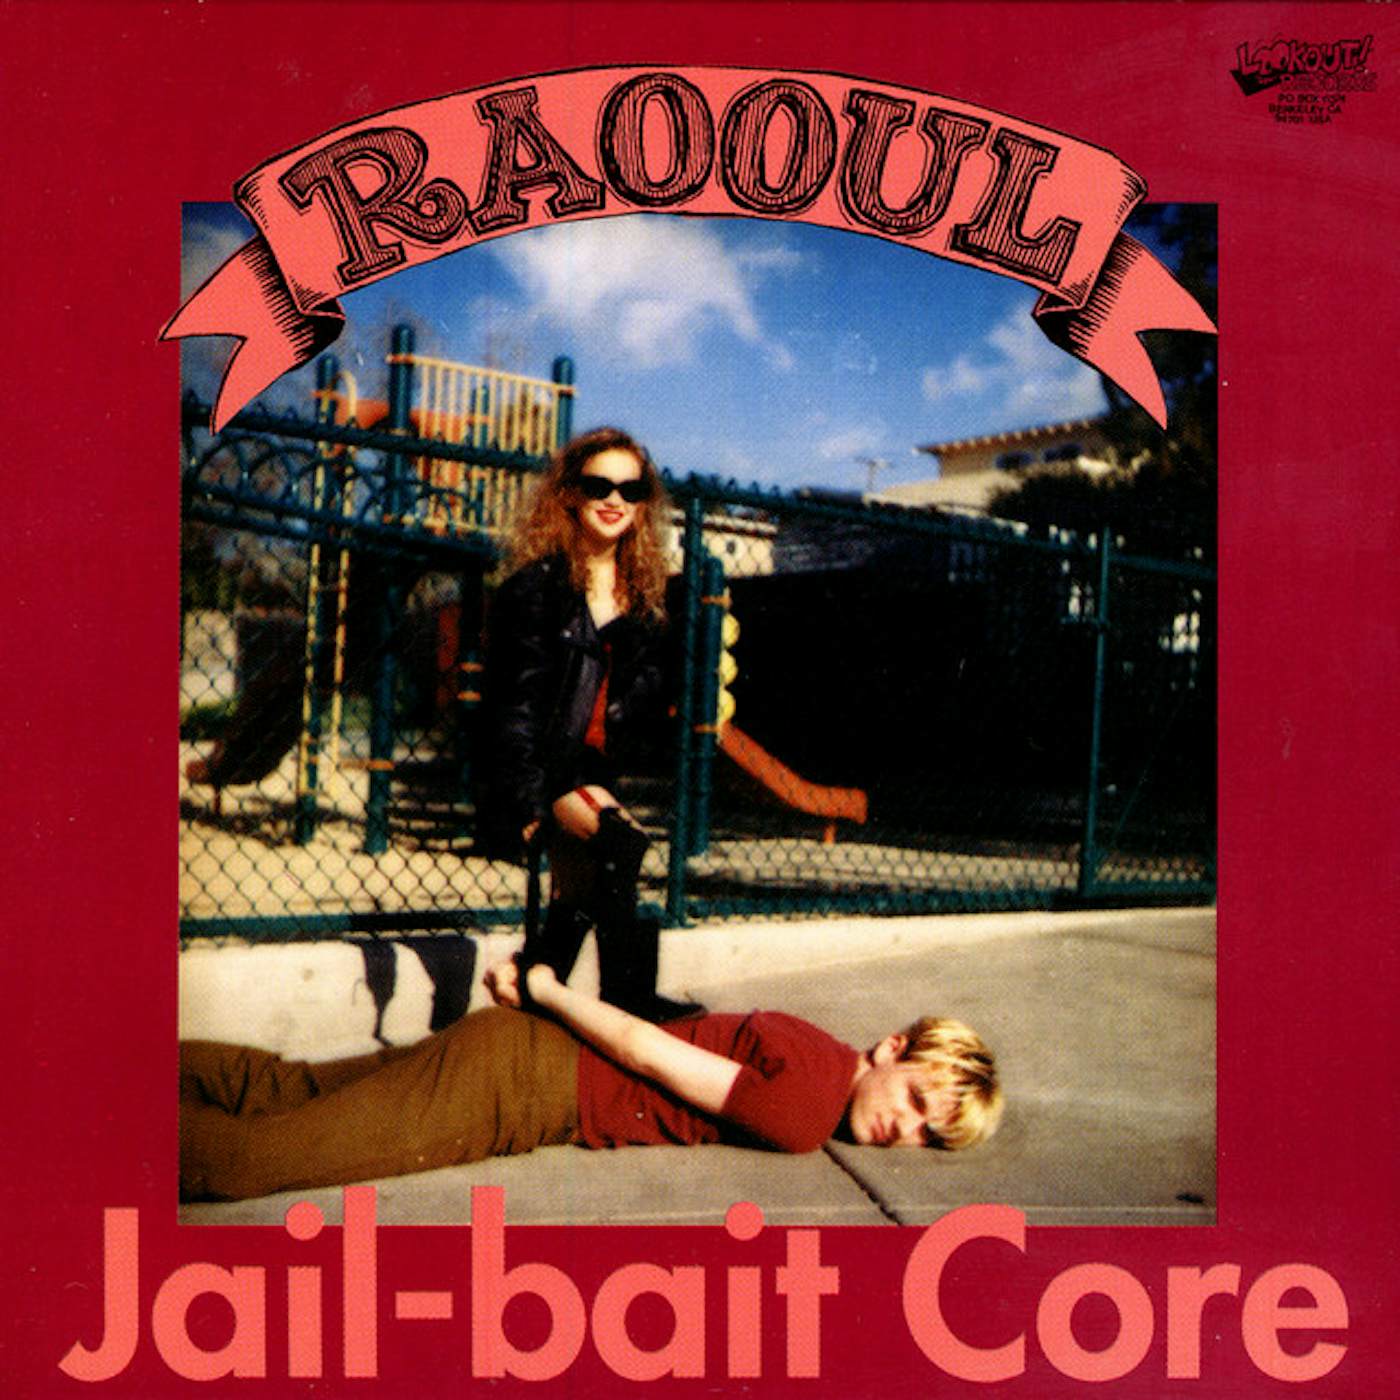 Skinned Teen/Raooul JAIL BAIT CORE Vinyl Record